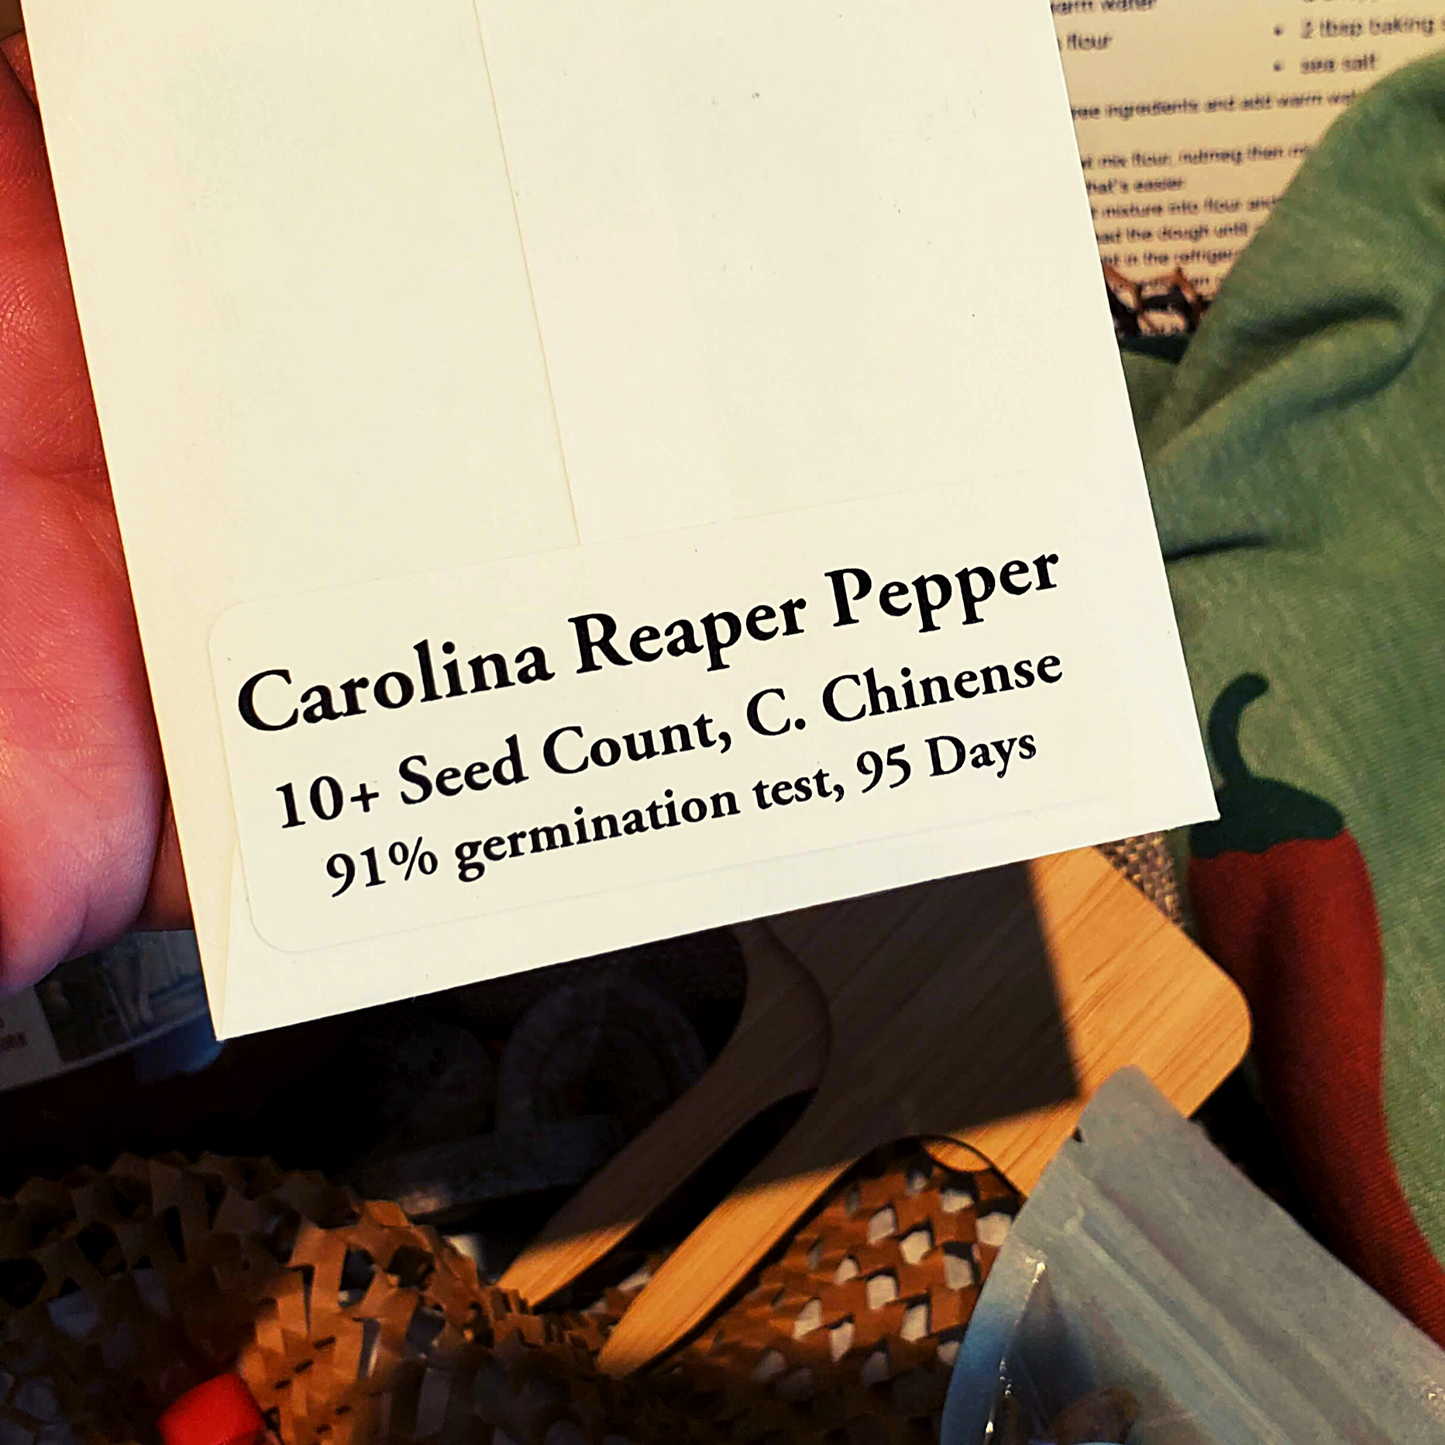 carolina reaper peppers seeds